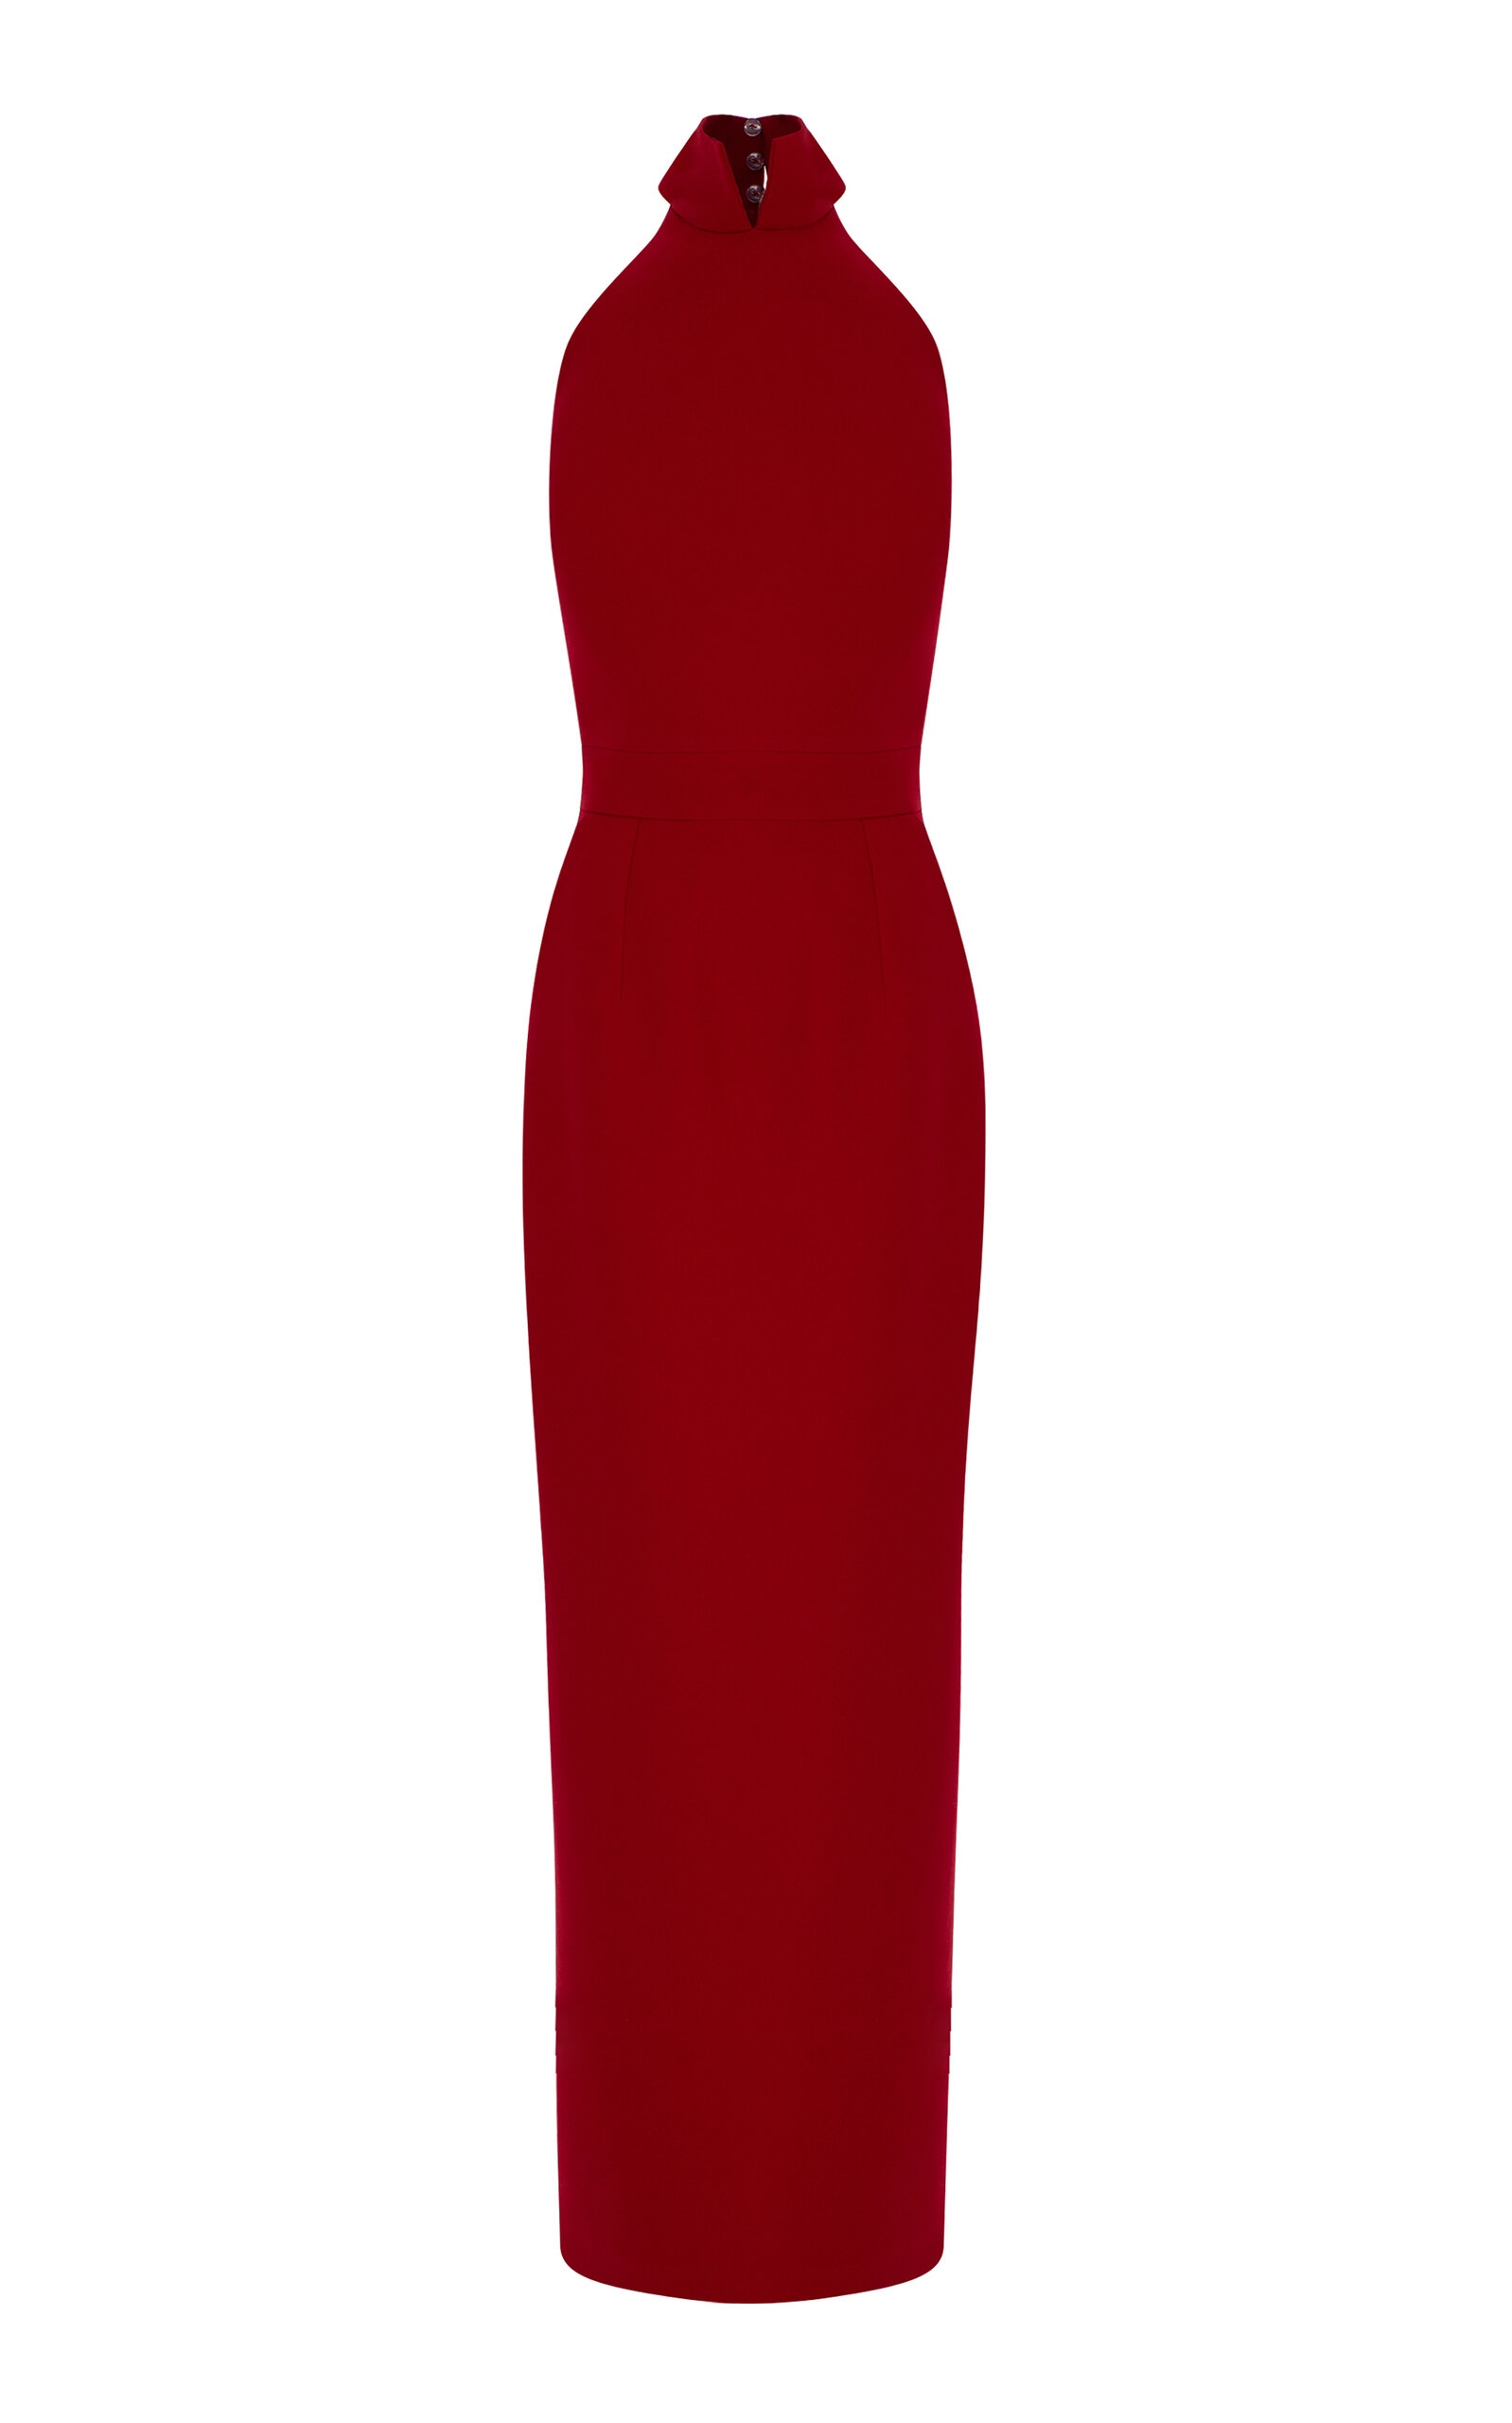 The New Arrivals Ilkyaz Ozel Hemingway High Neck Maxi Column Dress In Red